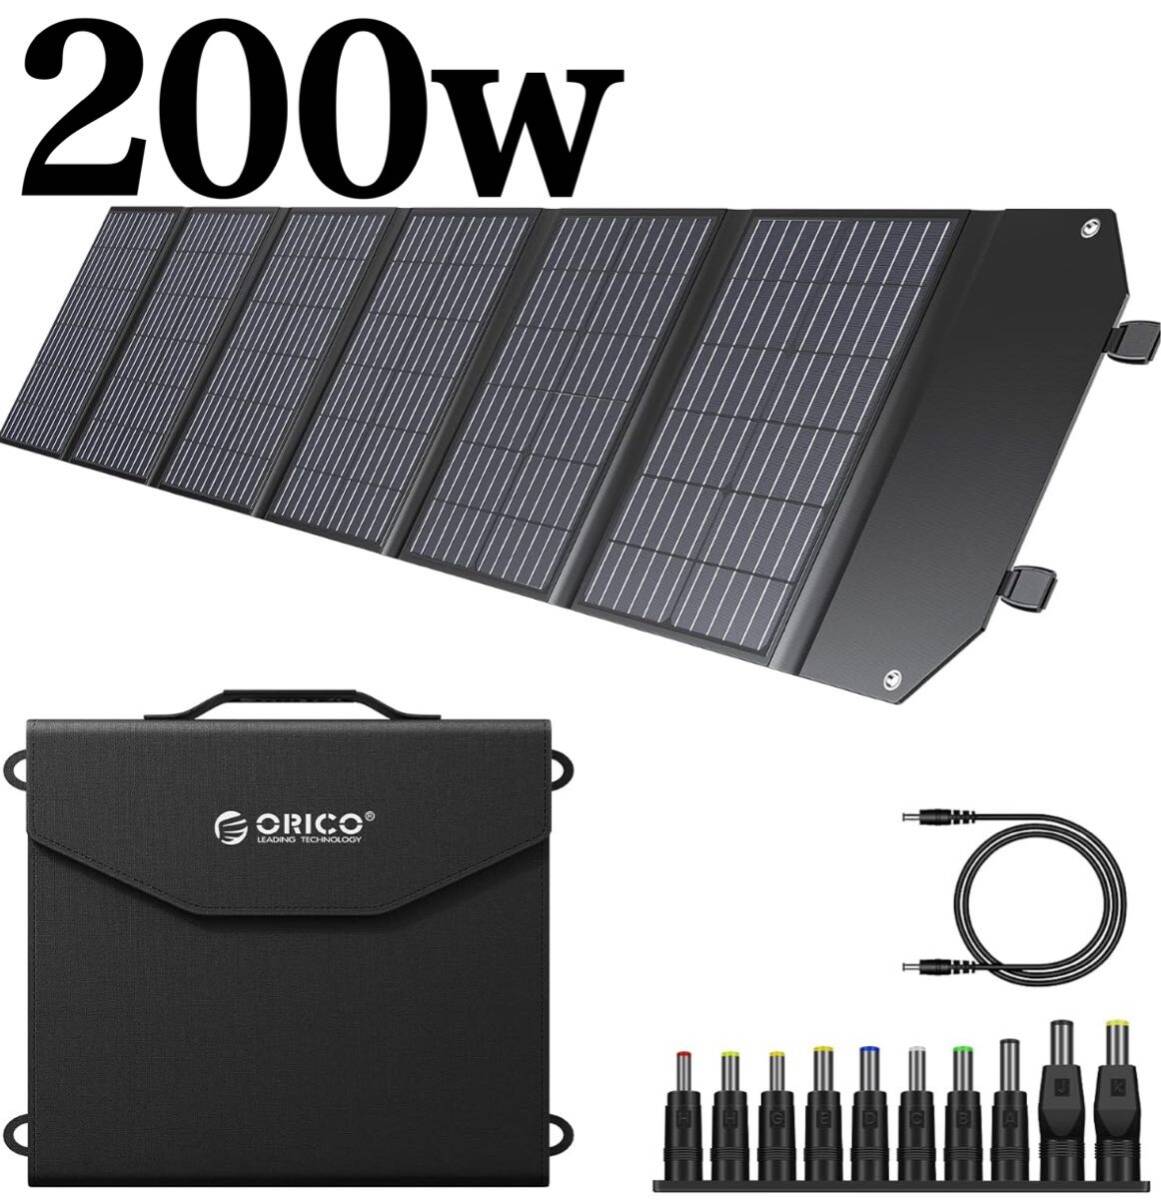 ORICO ソーラーパネル 200W ポータブル 太陽光パネル 折り畳み式 太陽光発電パネル ソーラー充電器 アウトドアキャンプ ポータブル電源の画像1